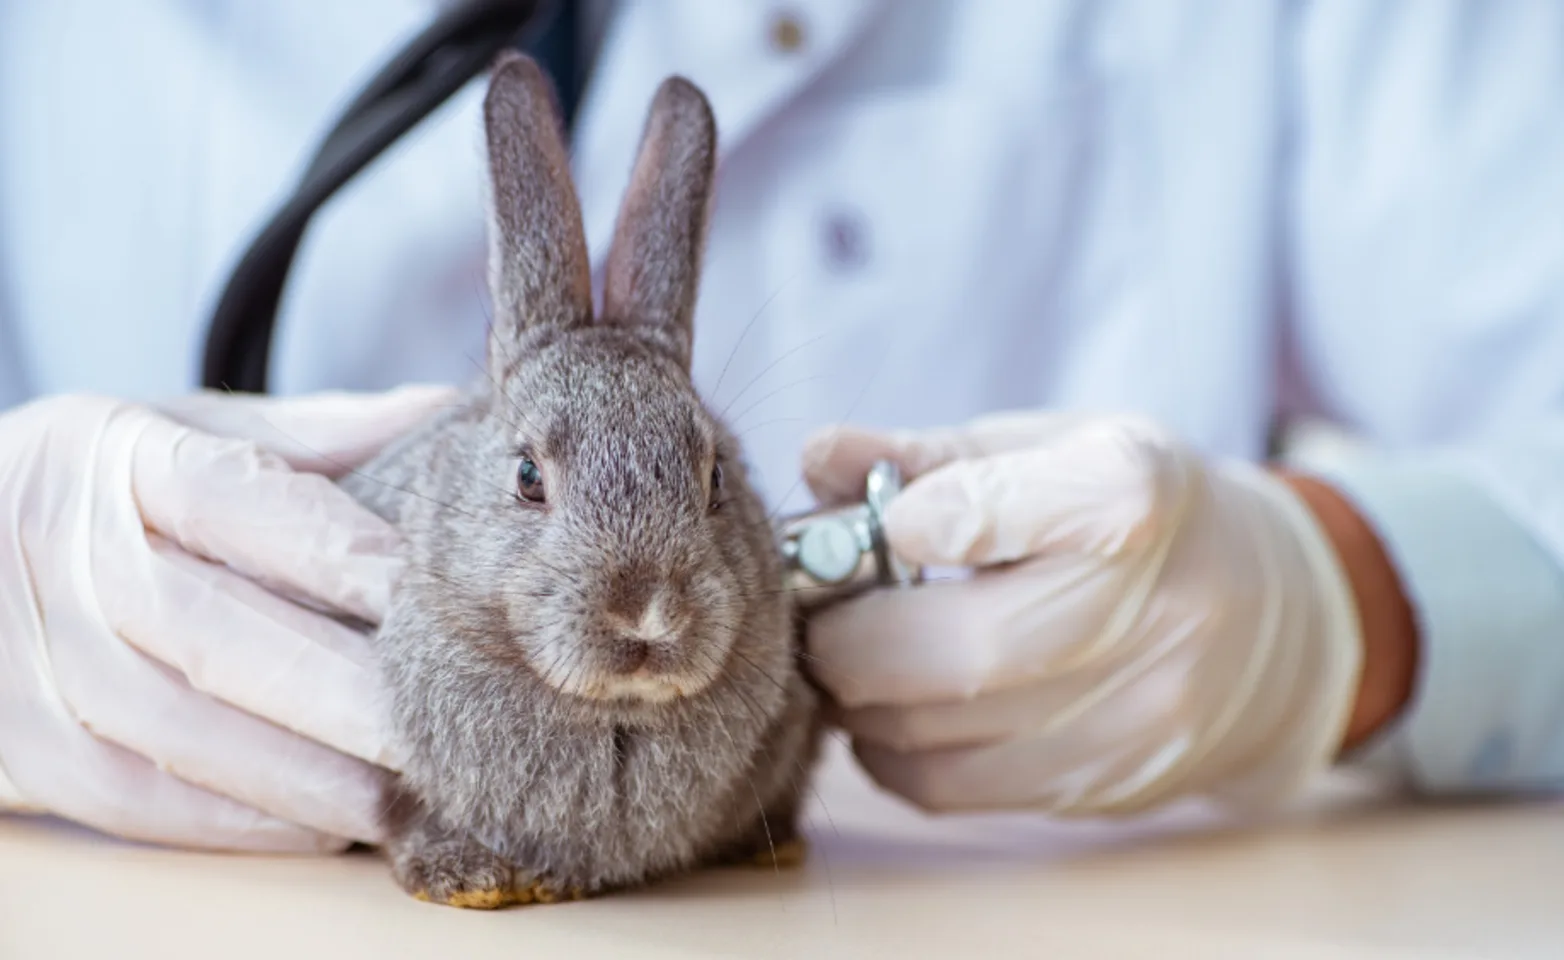 A veterinarian examining a gray rabbit